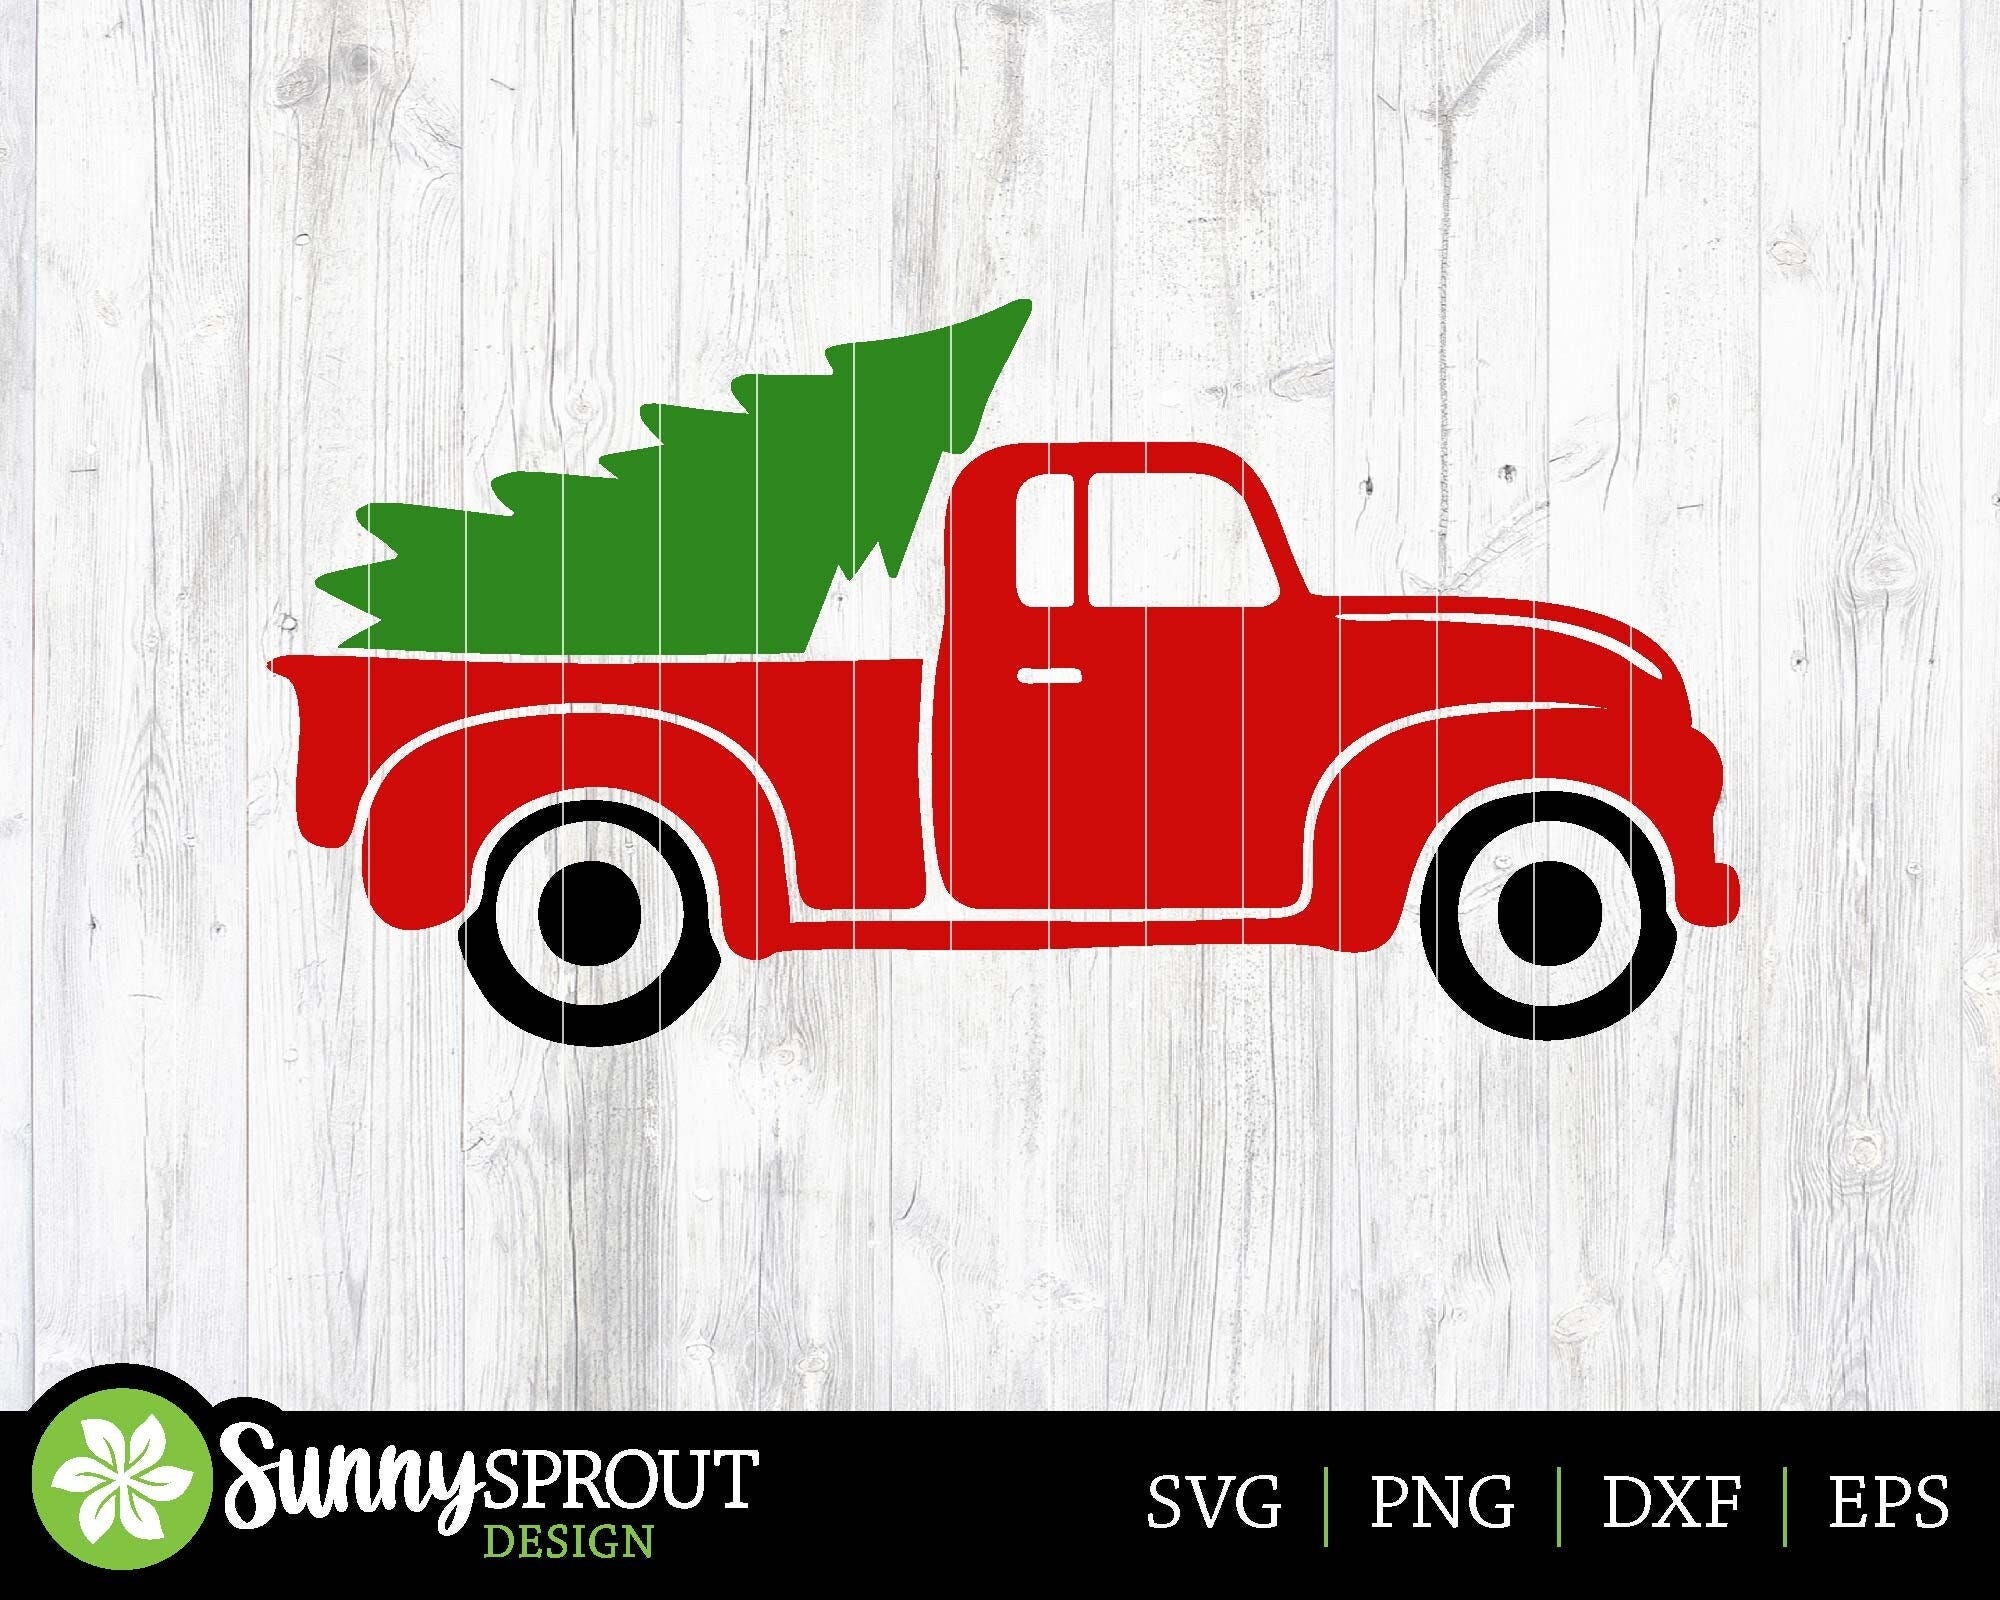 Christmas Tree Old Truck; Digital Download | Print File, Cricut, Silhouette Cut File | Christmas Shirt, Sign, Mug Design | svg png dxf eps